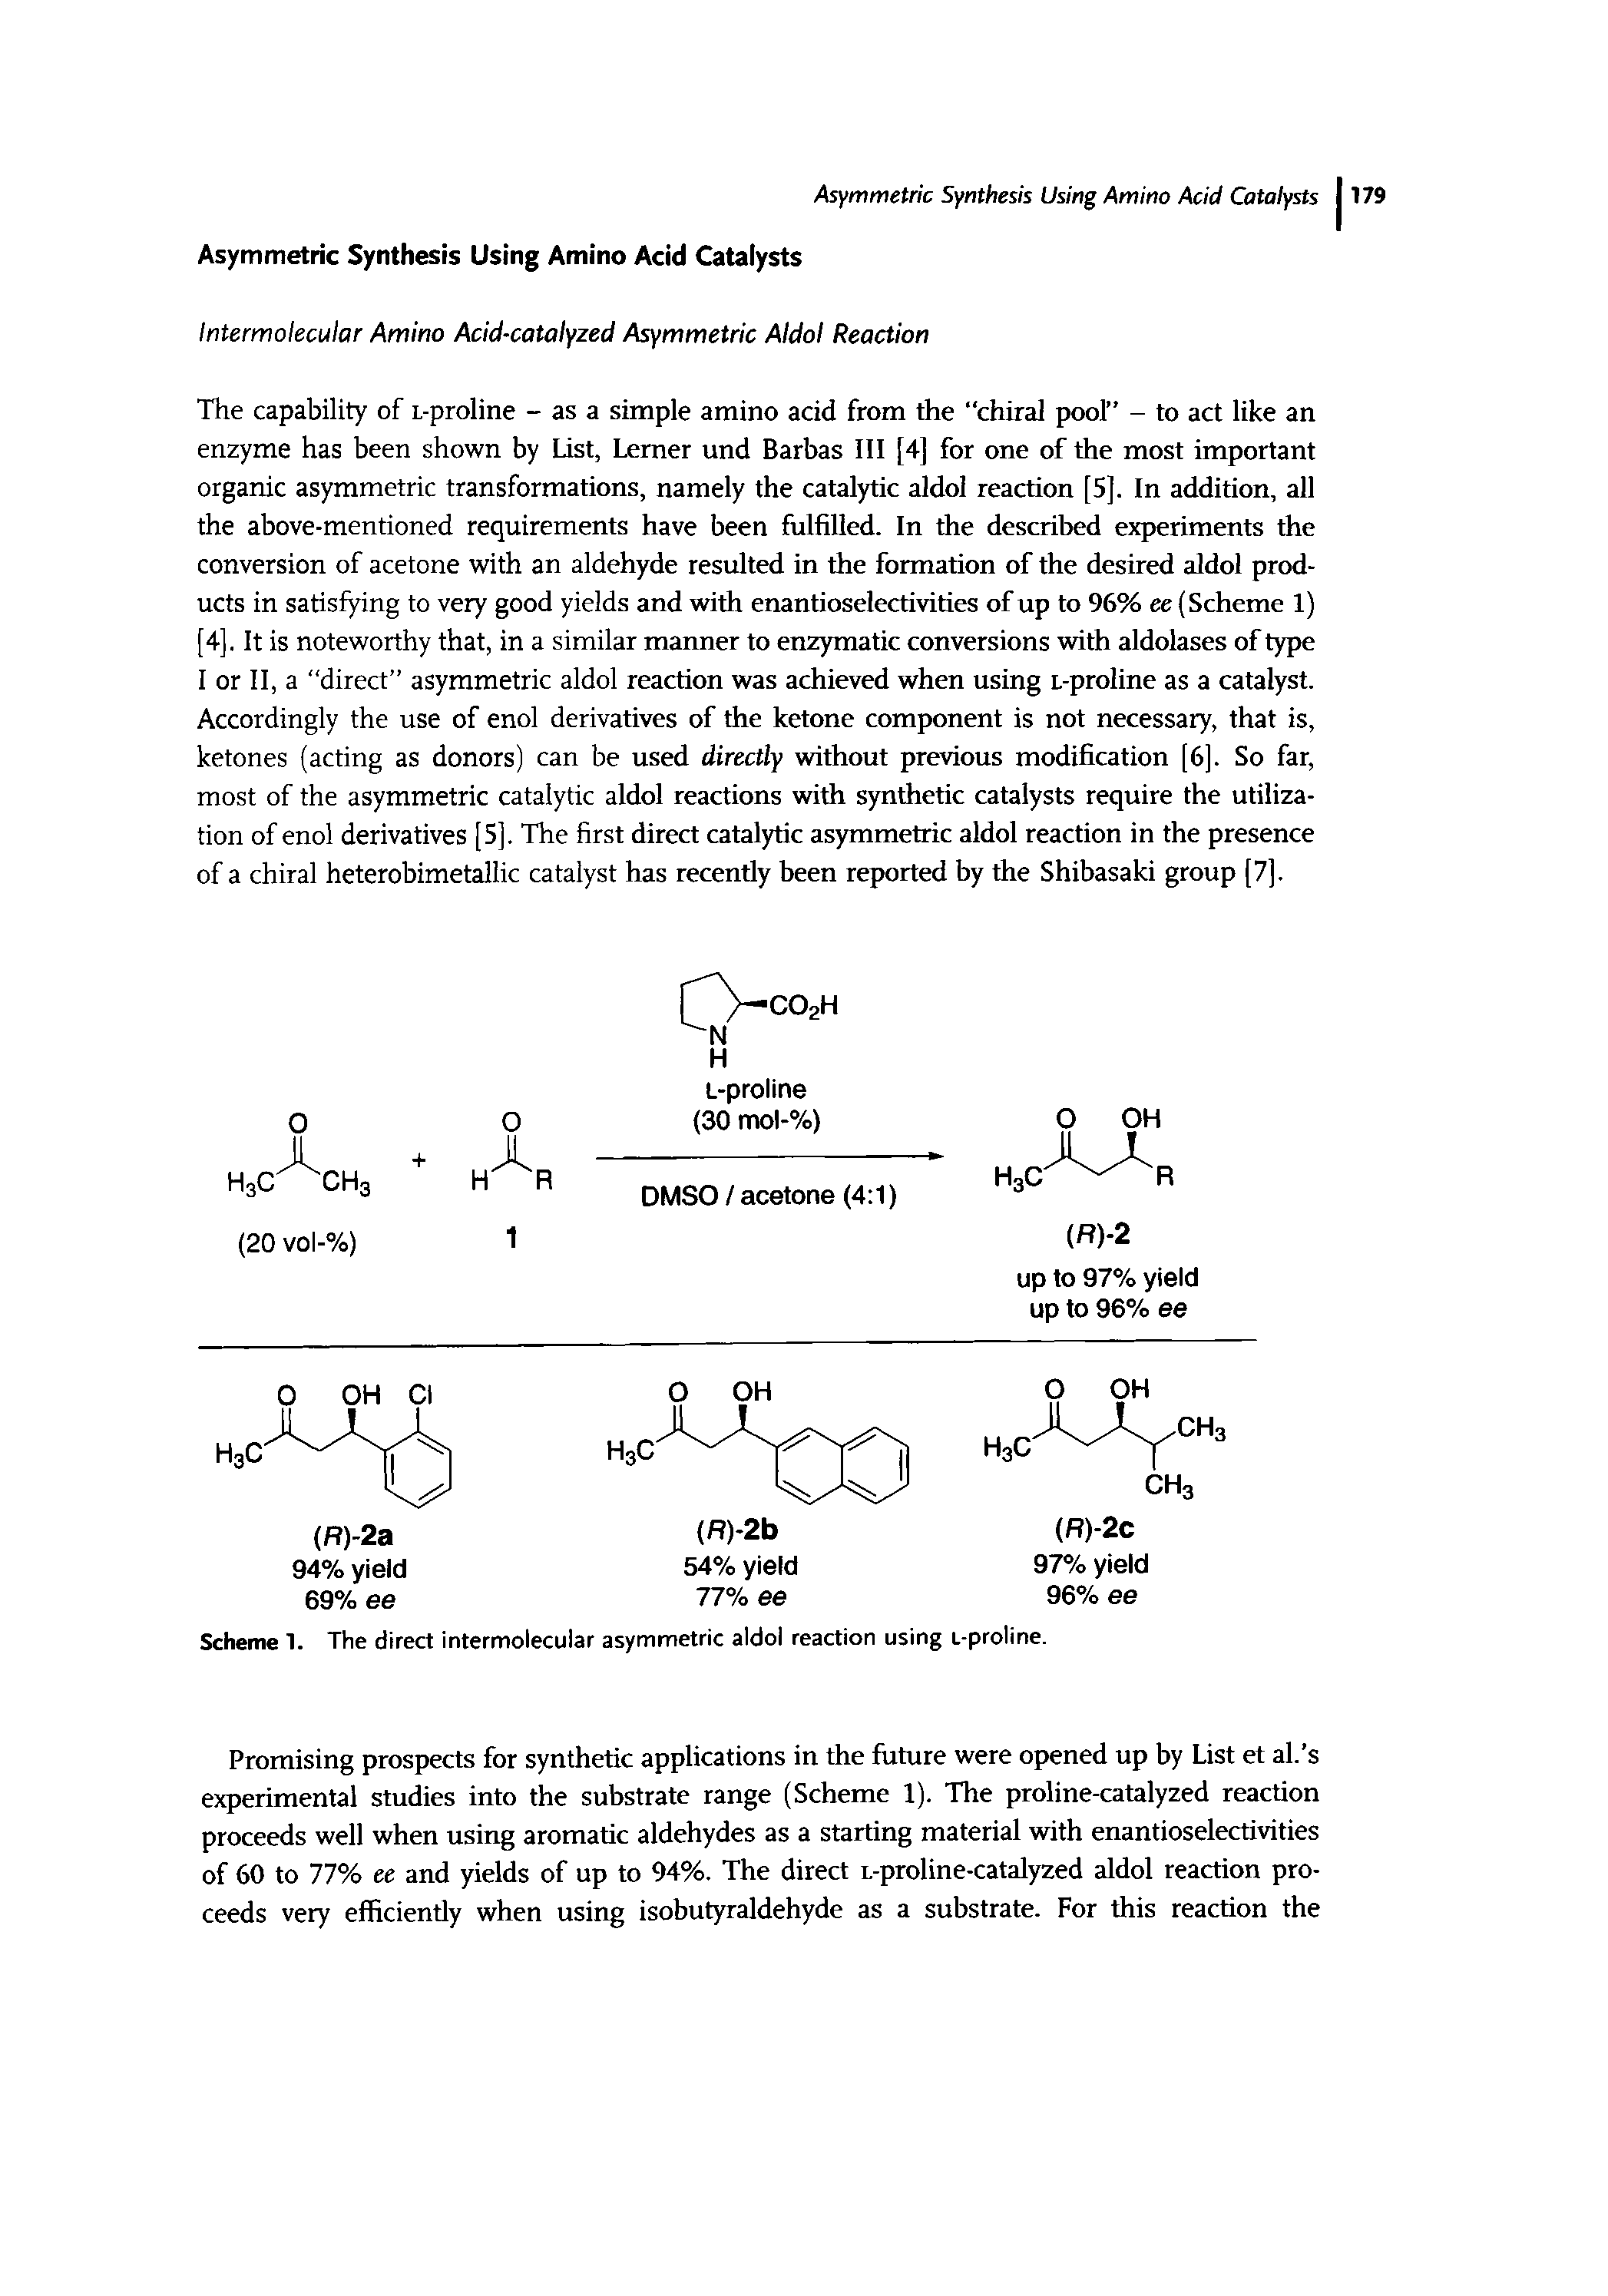 Scheme 1. The direct intermolecular asymmetric aldol reaction using L-proline.